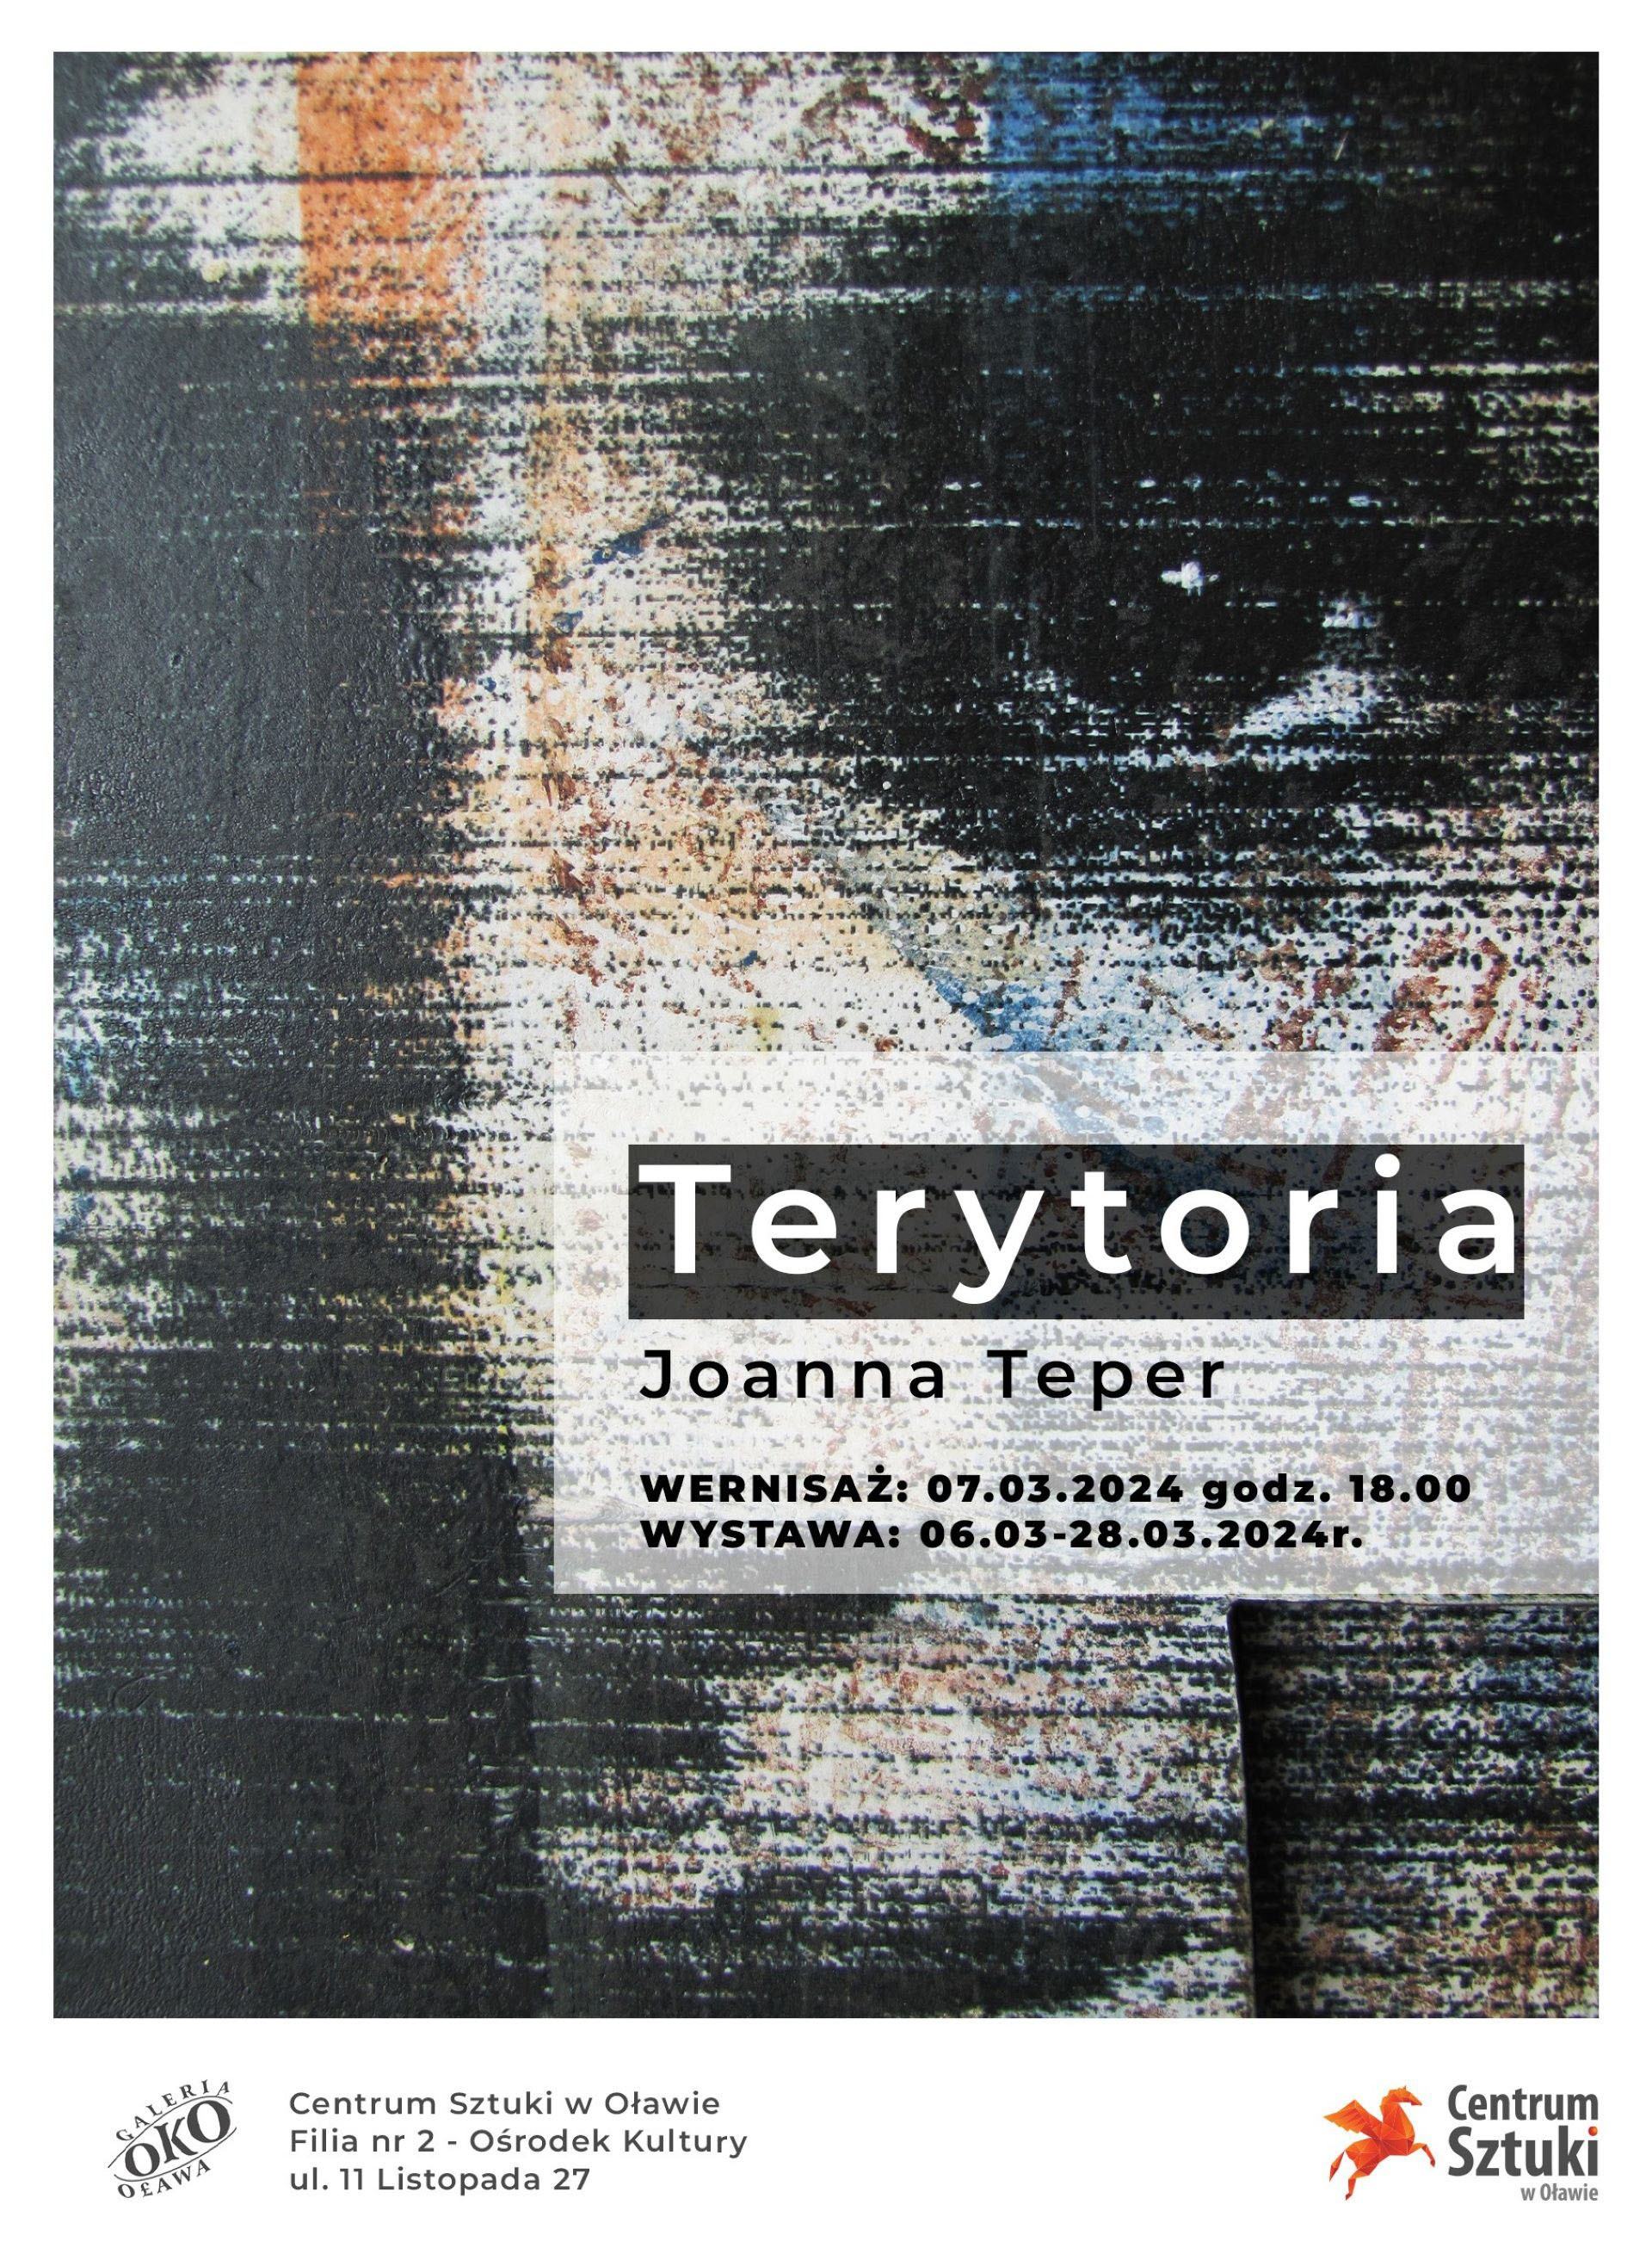 Joanna Teper, Terytoria